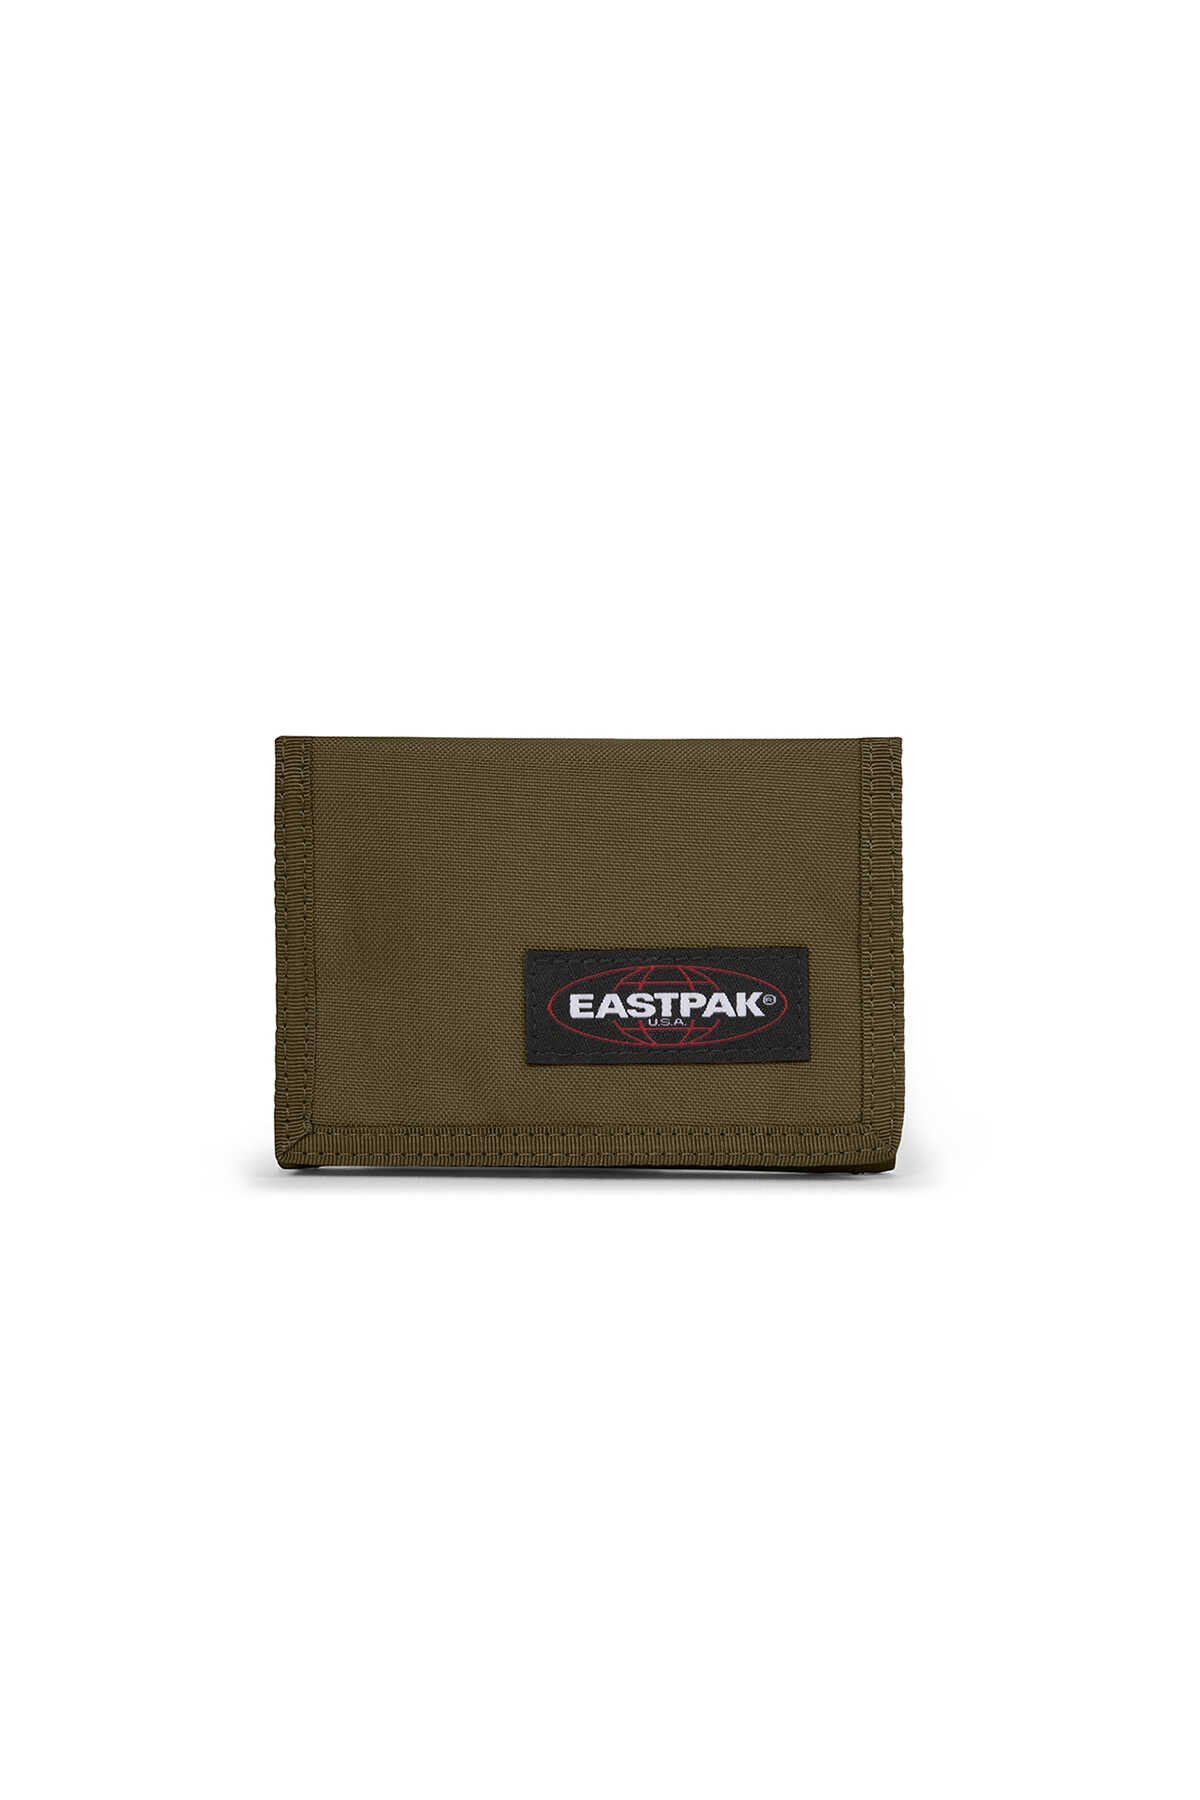 Eastpak - Eastpak CREW SINGLE Unisex Cüzdan Army Olive